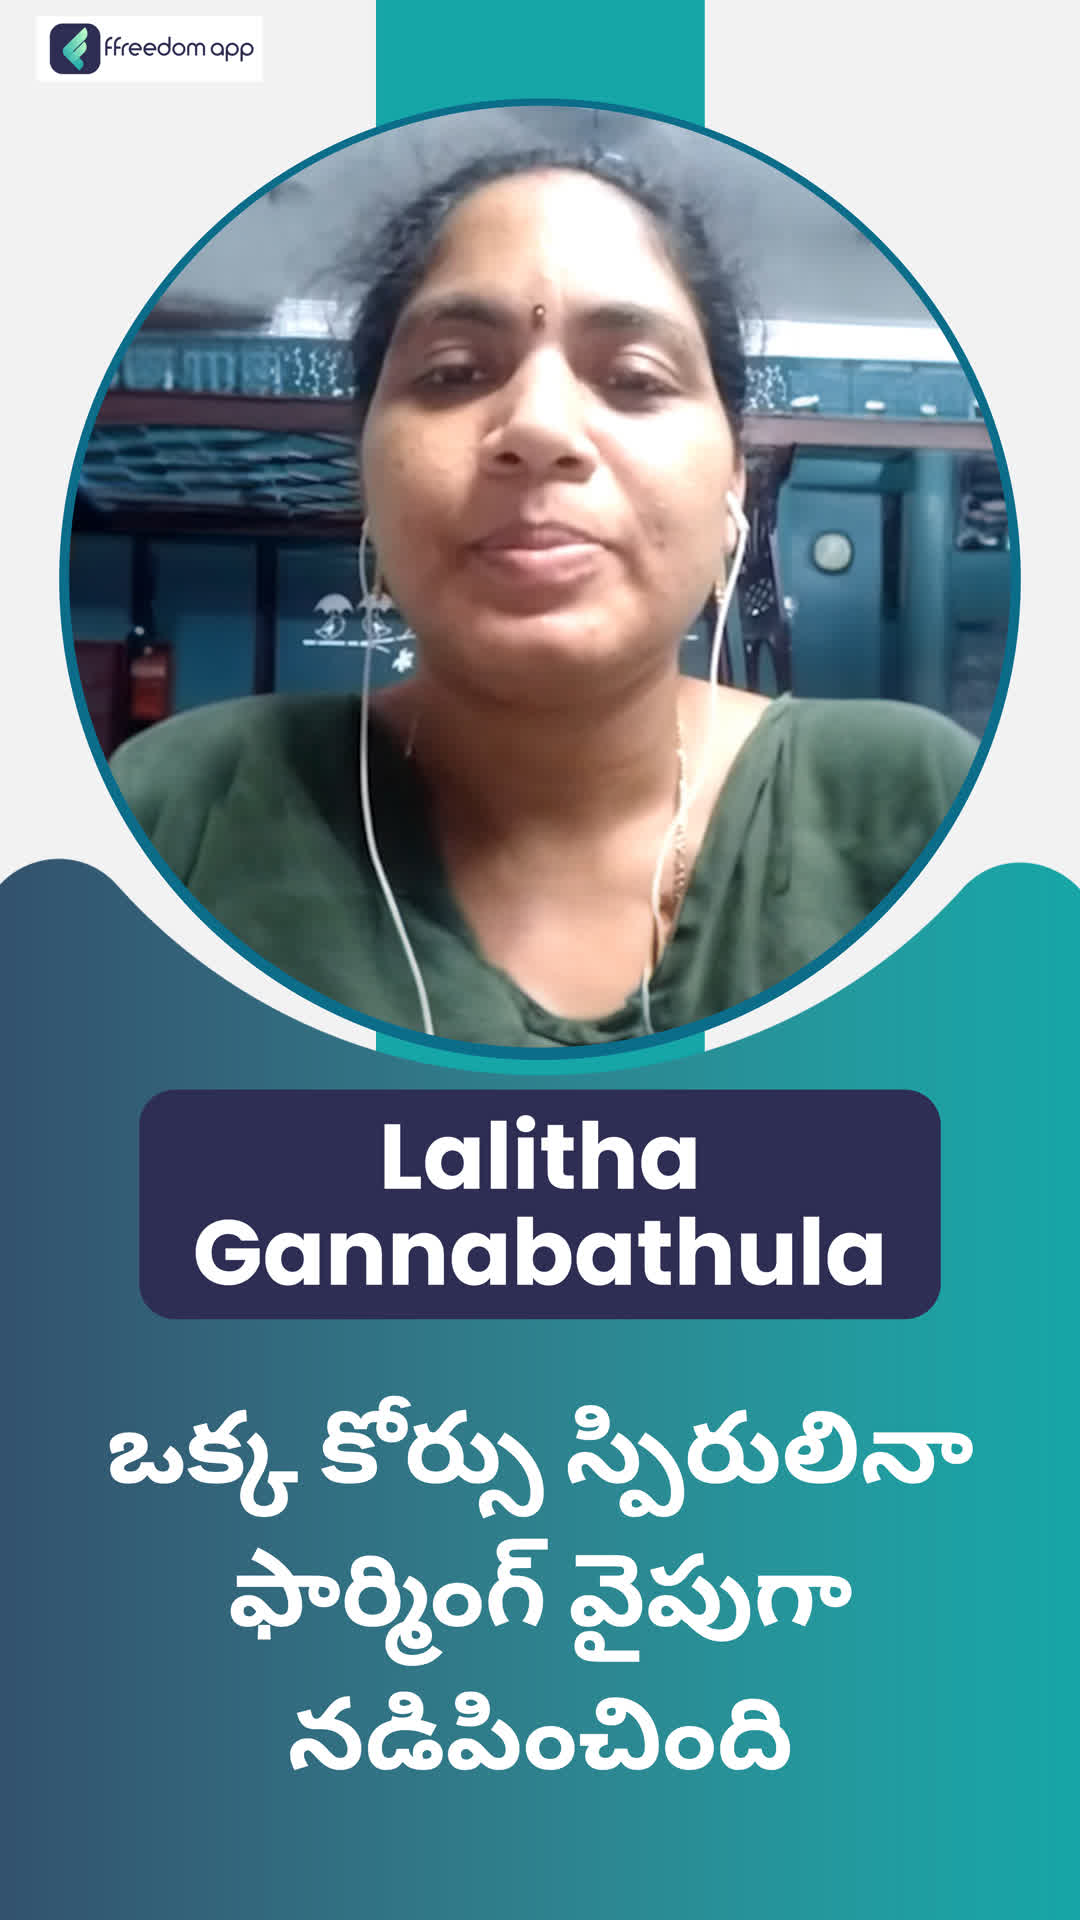 LALITHA GANNABATHULA's Honest Review of ffreedom app - East Godavari ,Telangana